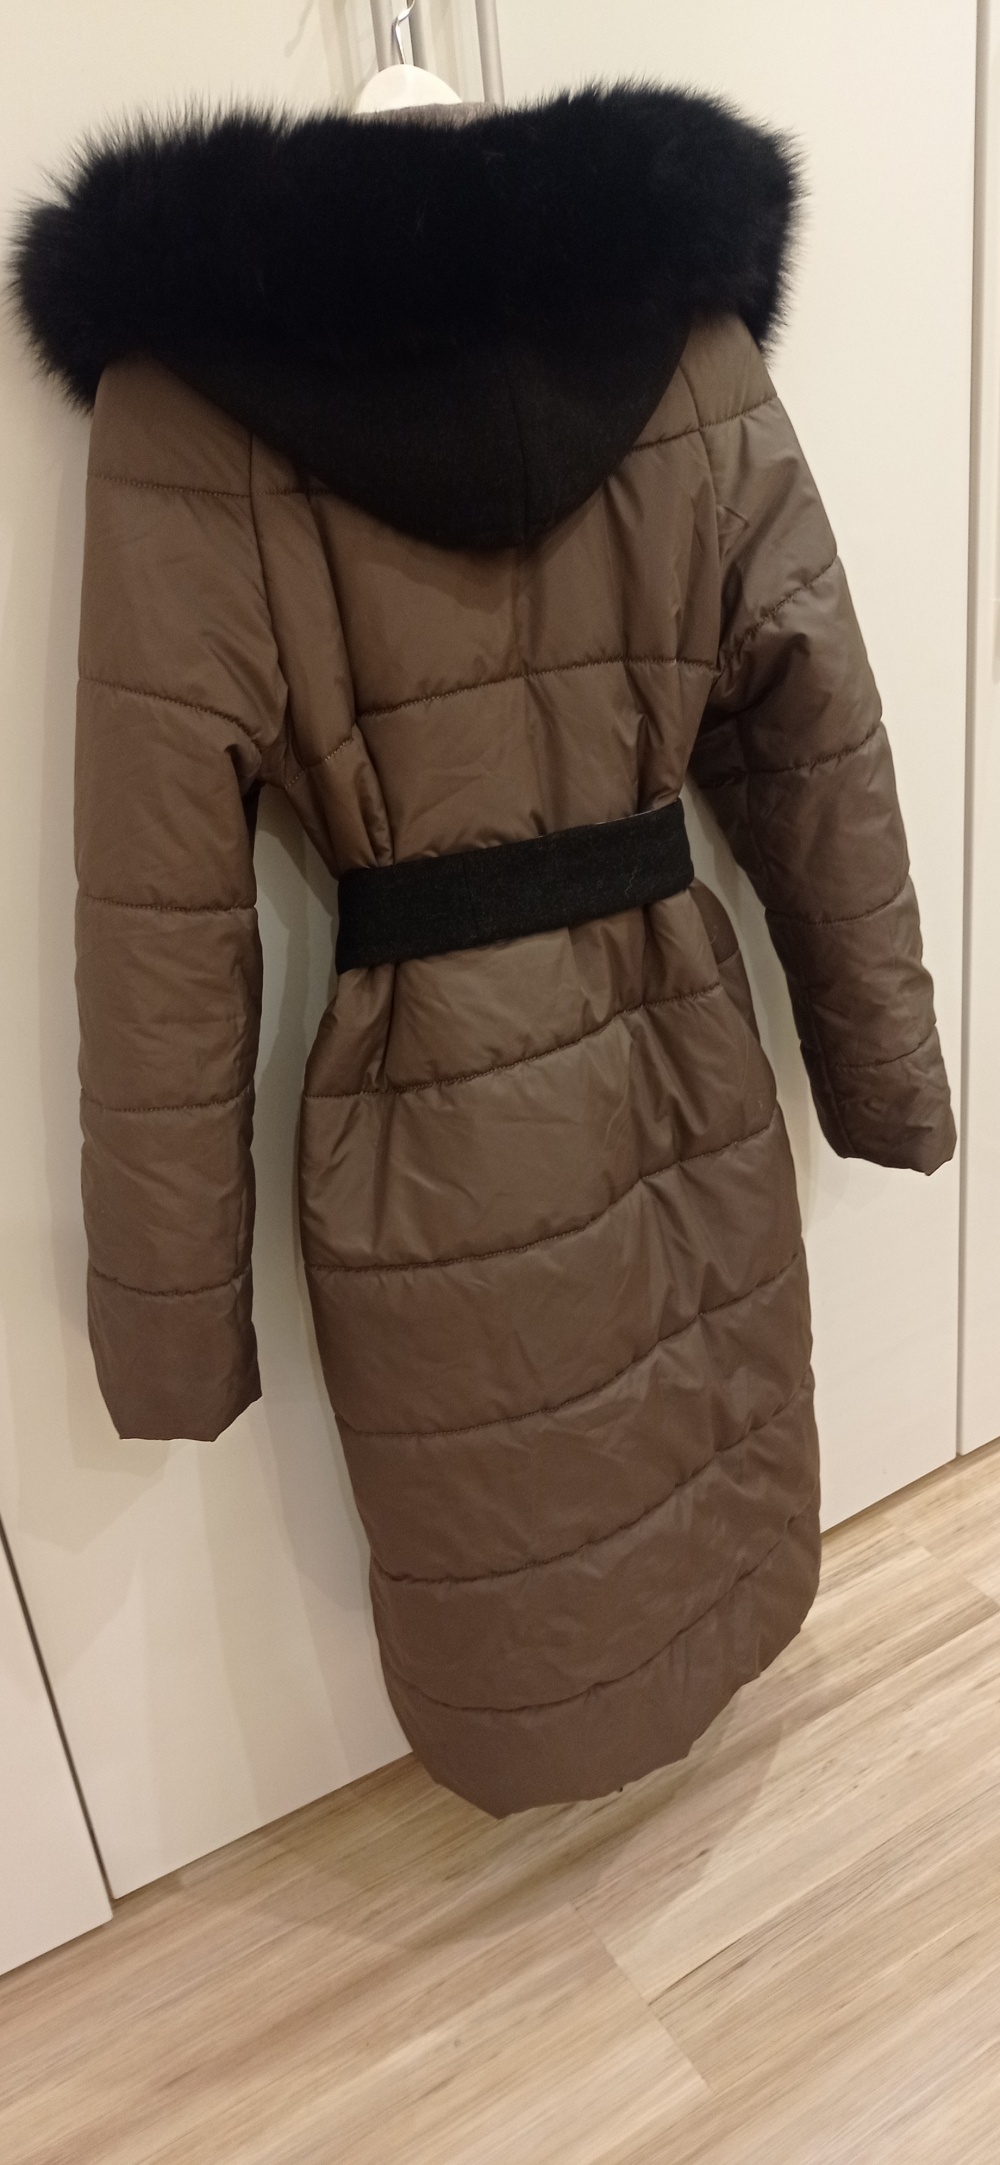 Пуховик пальто Турция размер М-L